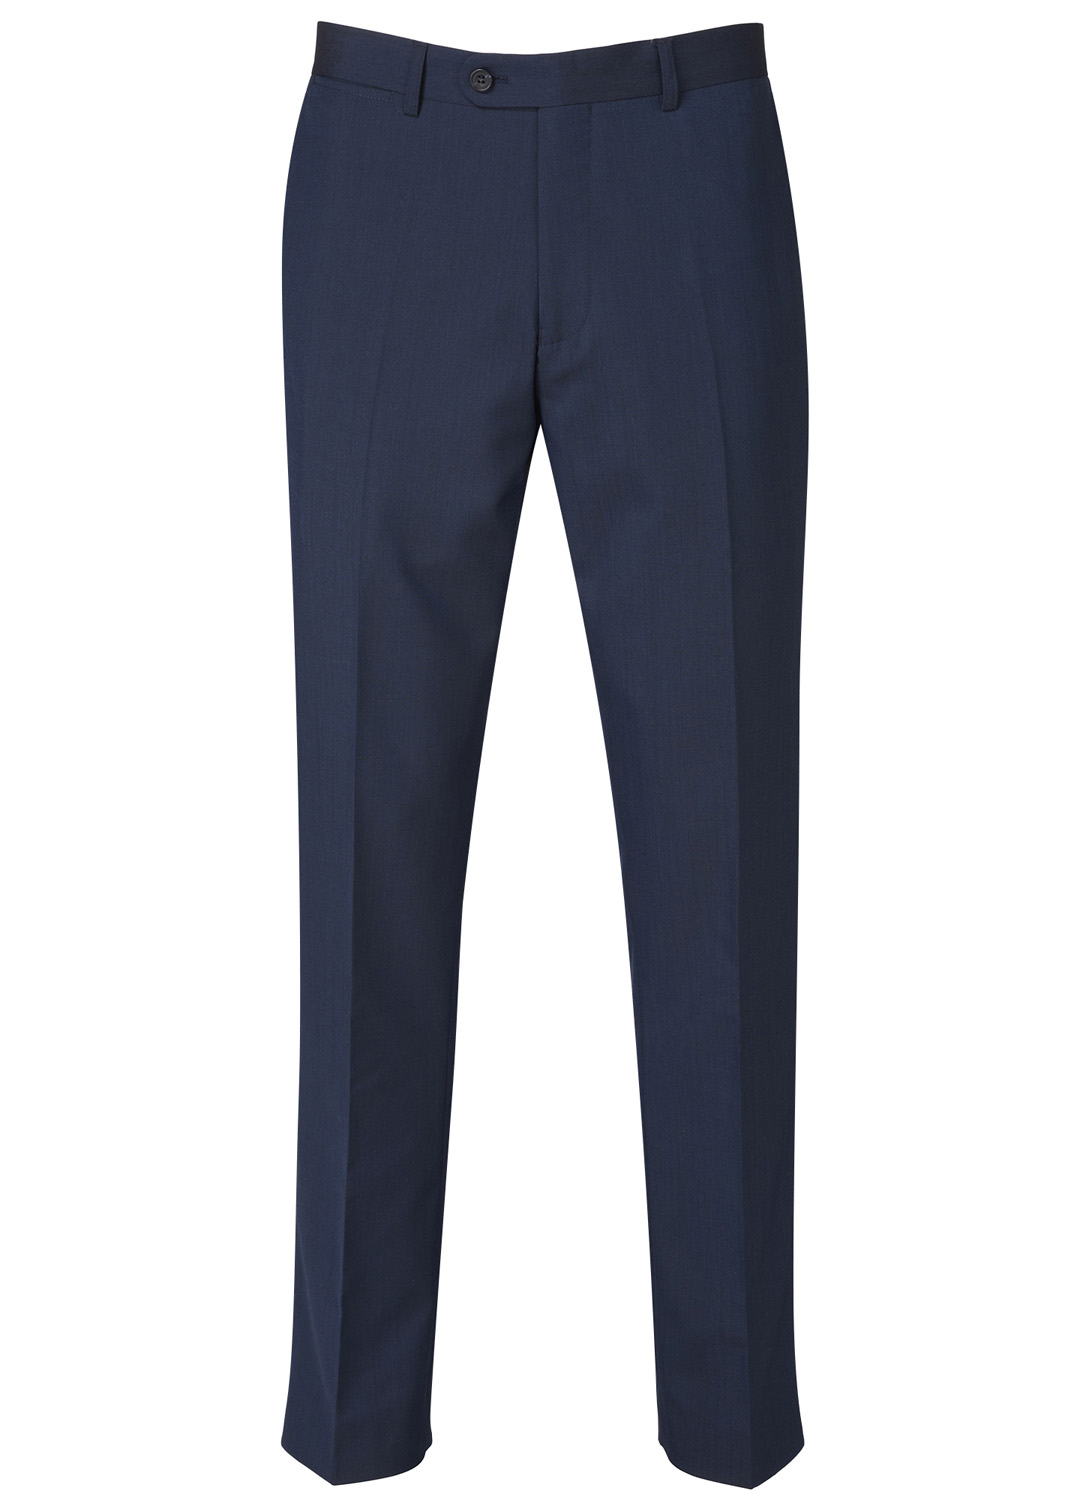 Egan Navy 3 Piece Suit - Tom Murphy's Formal and Menswear